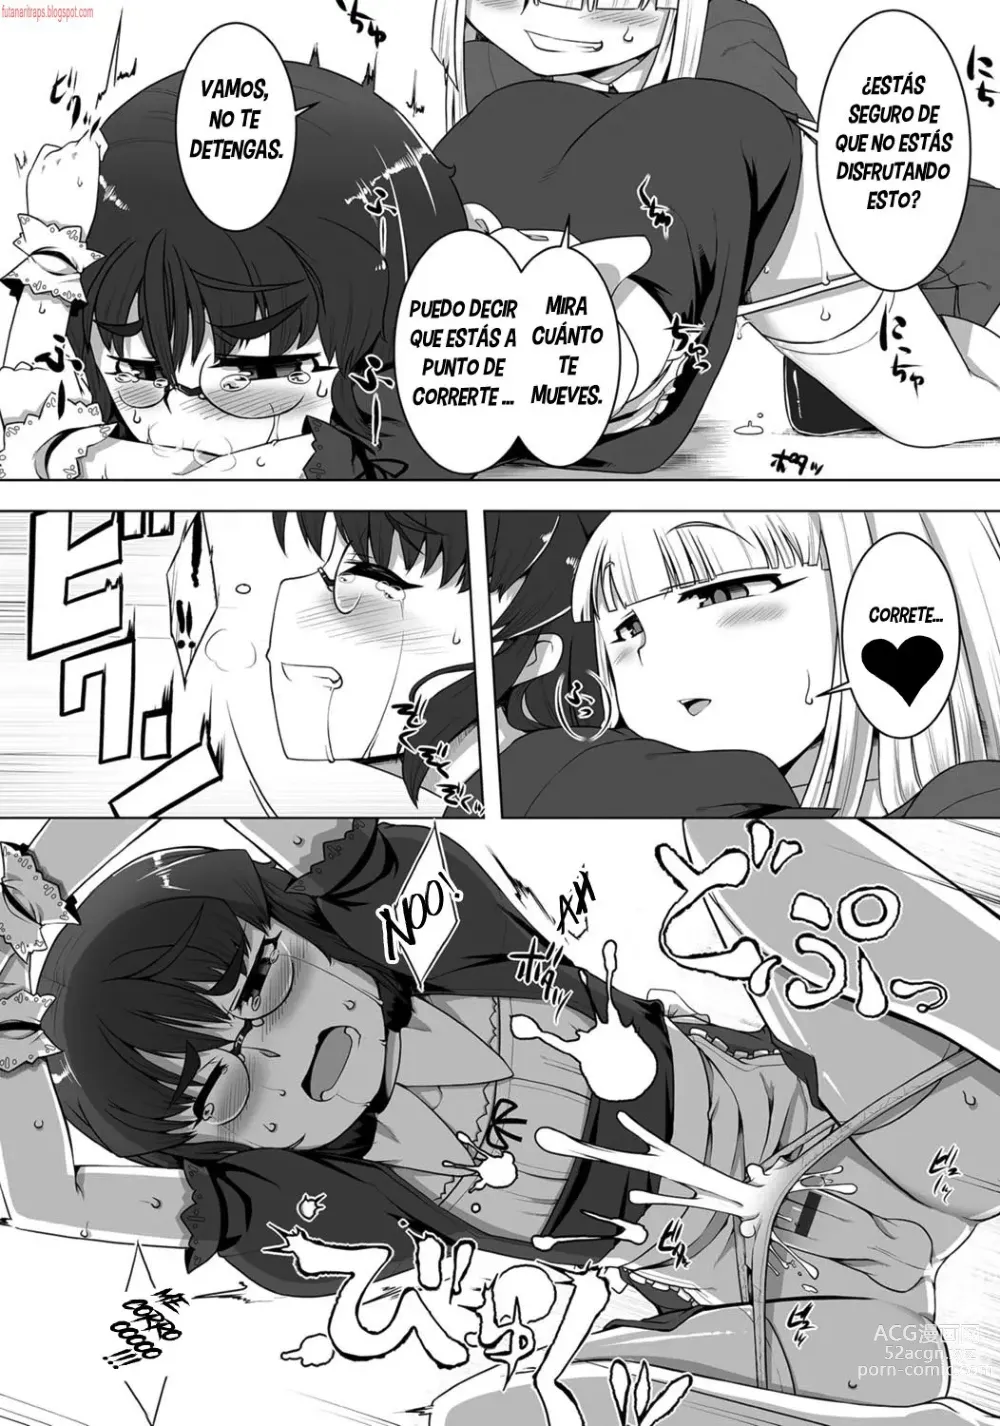 Page 7 of manga Amaneku Subete o Kimi ni!